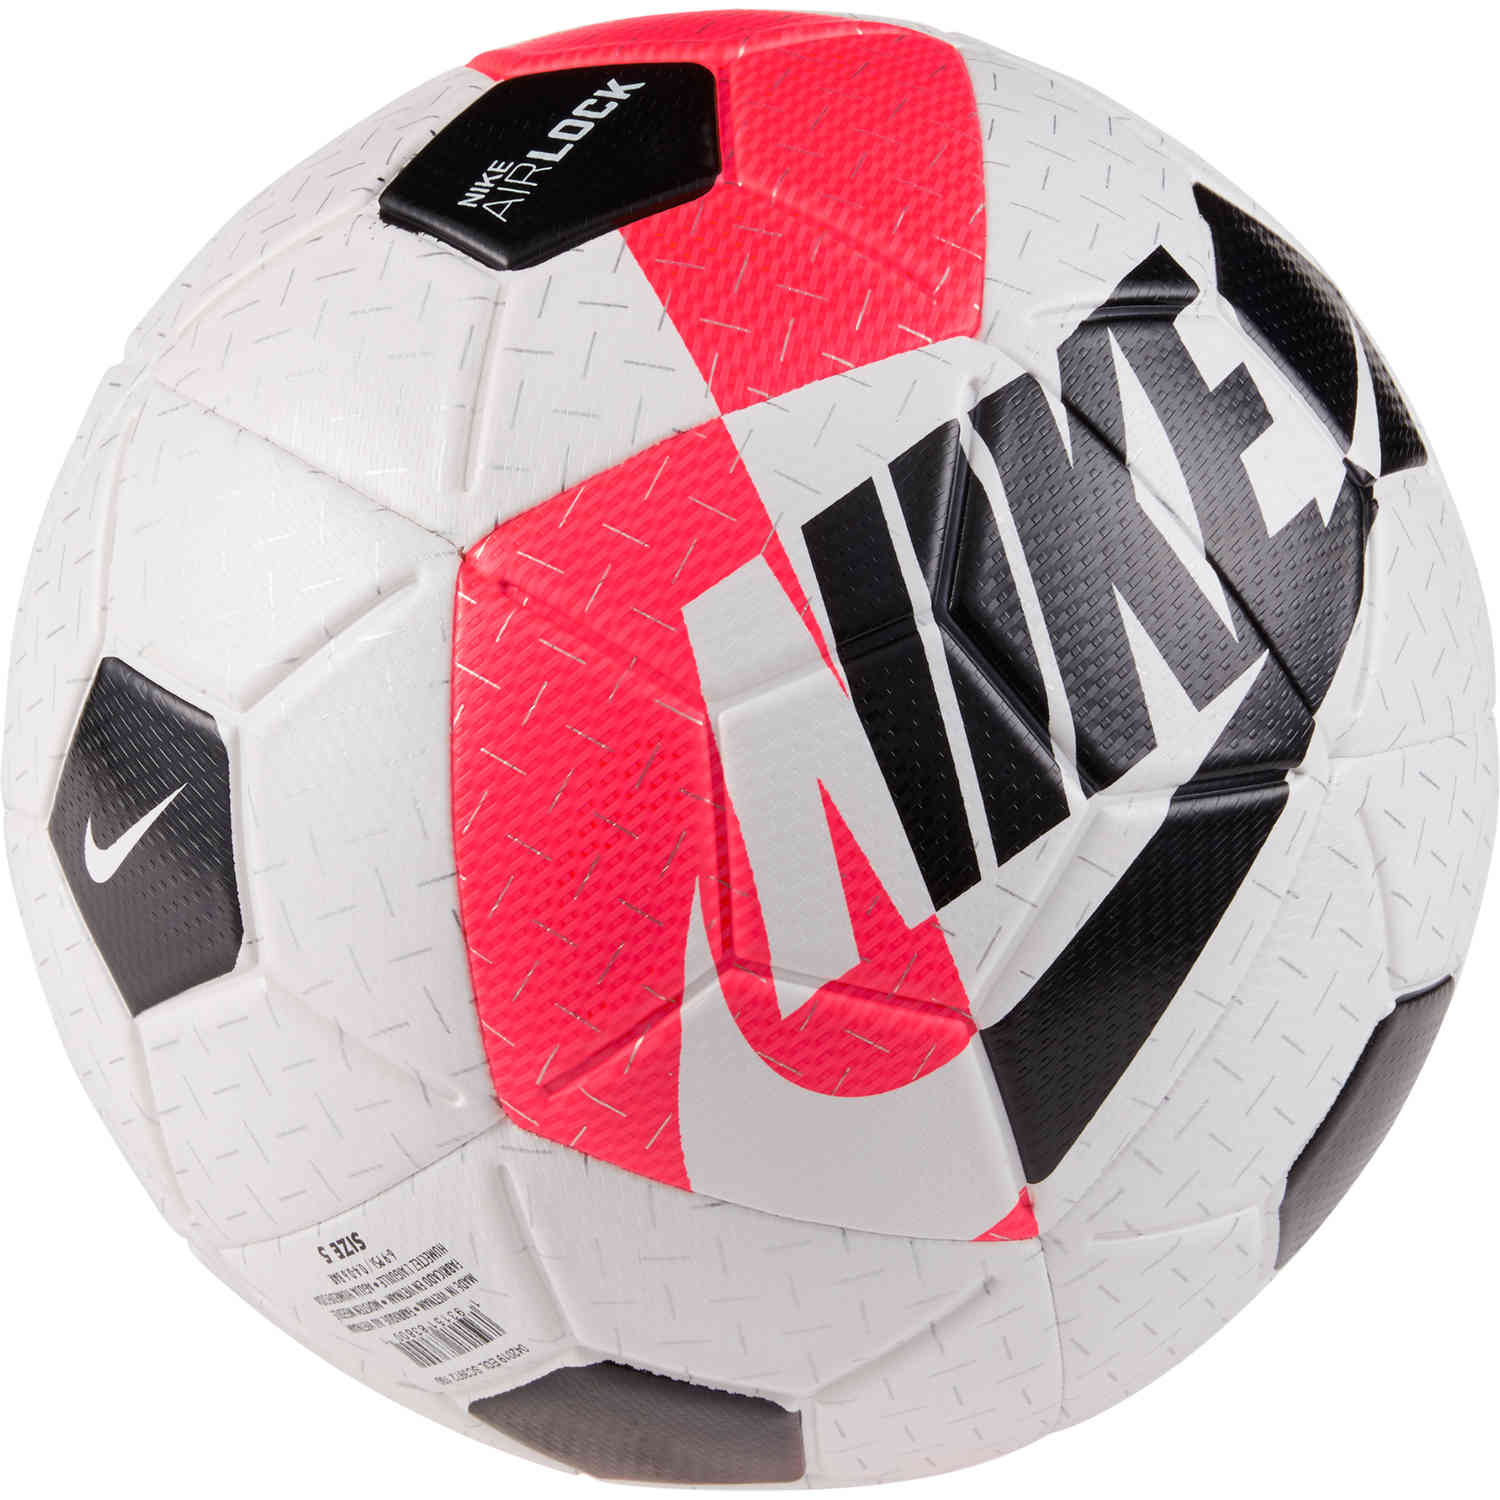 Nike Airlock Street X Soccer Ball - White/Bright Crimson/Black 